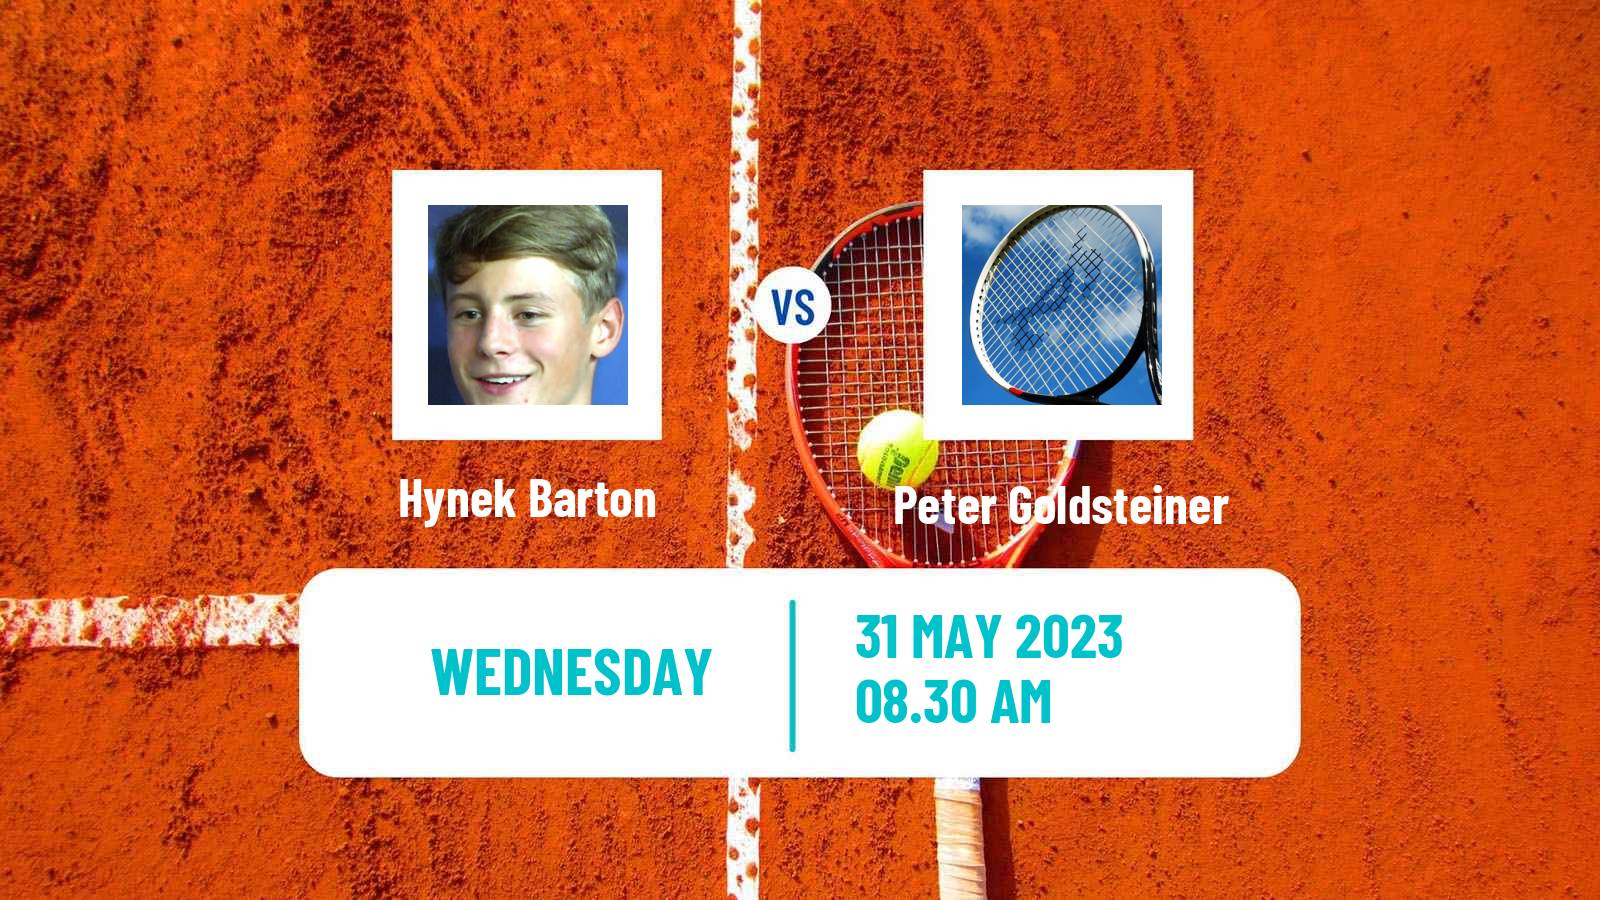 Tennis ITF M25 Jablonec Nad Nisou Men Hynek Barton - Peter Goldsteiner